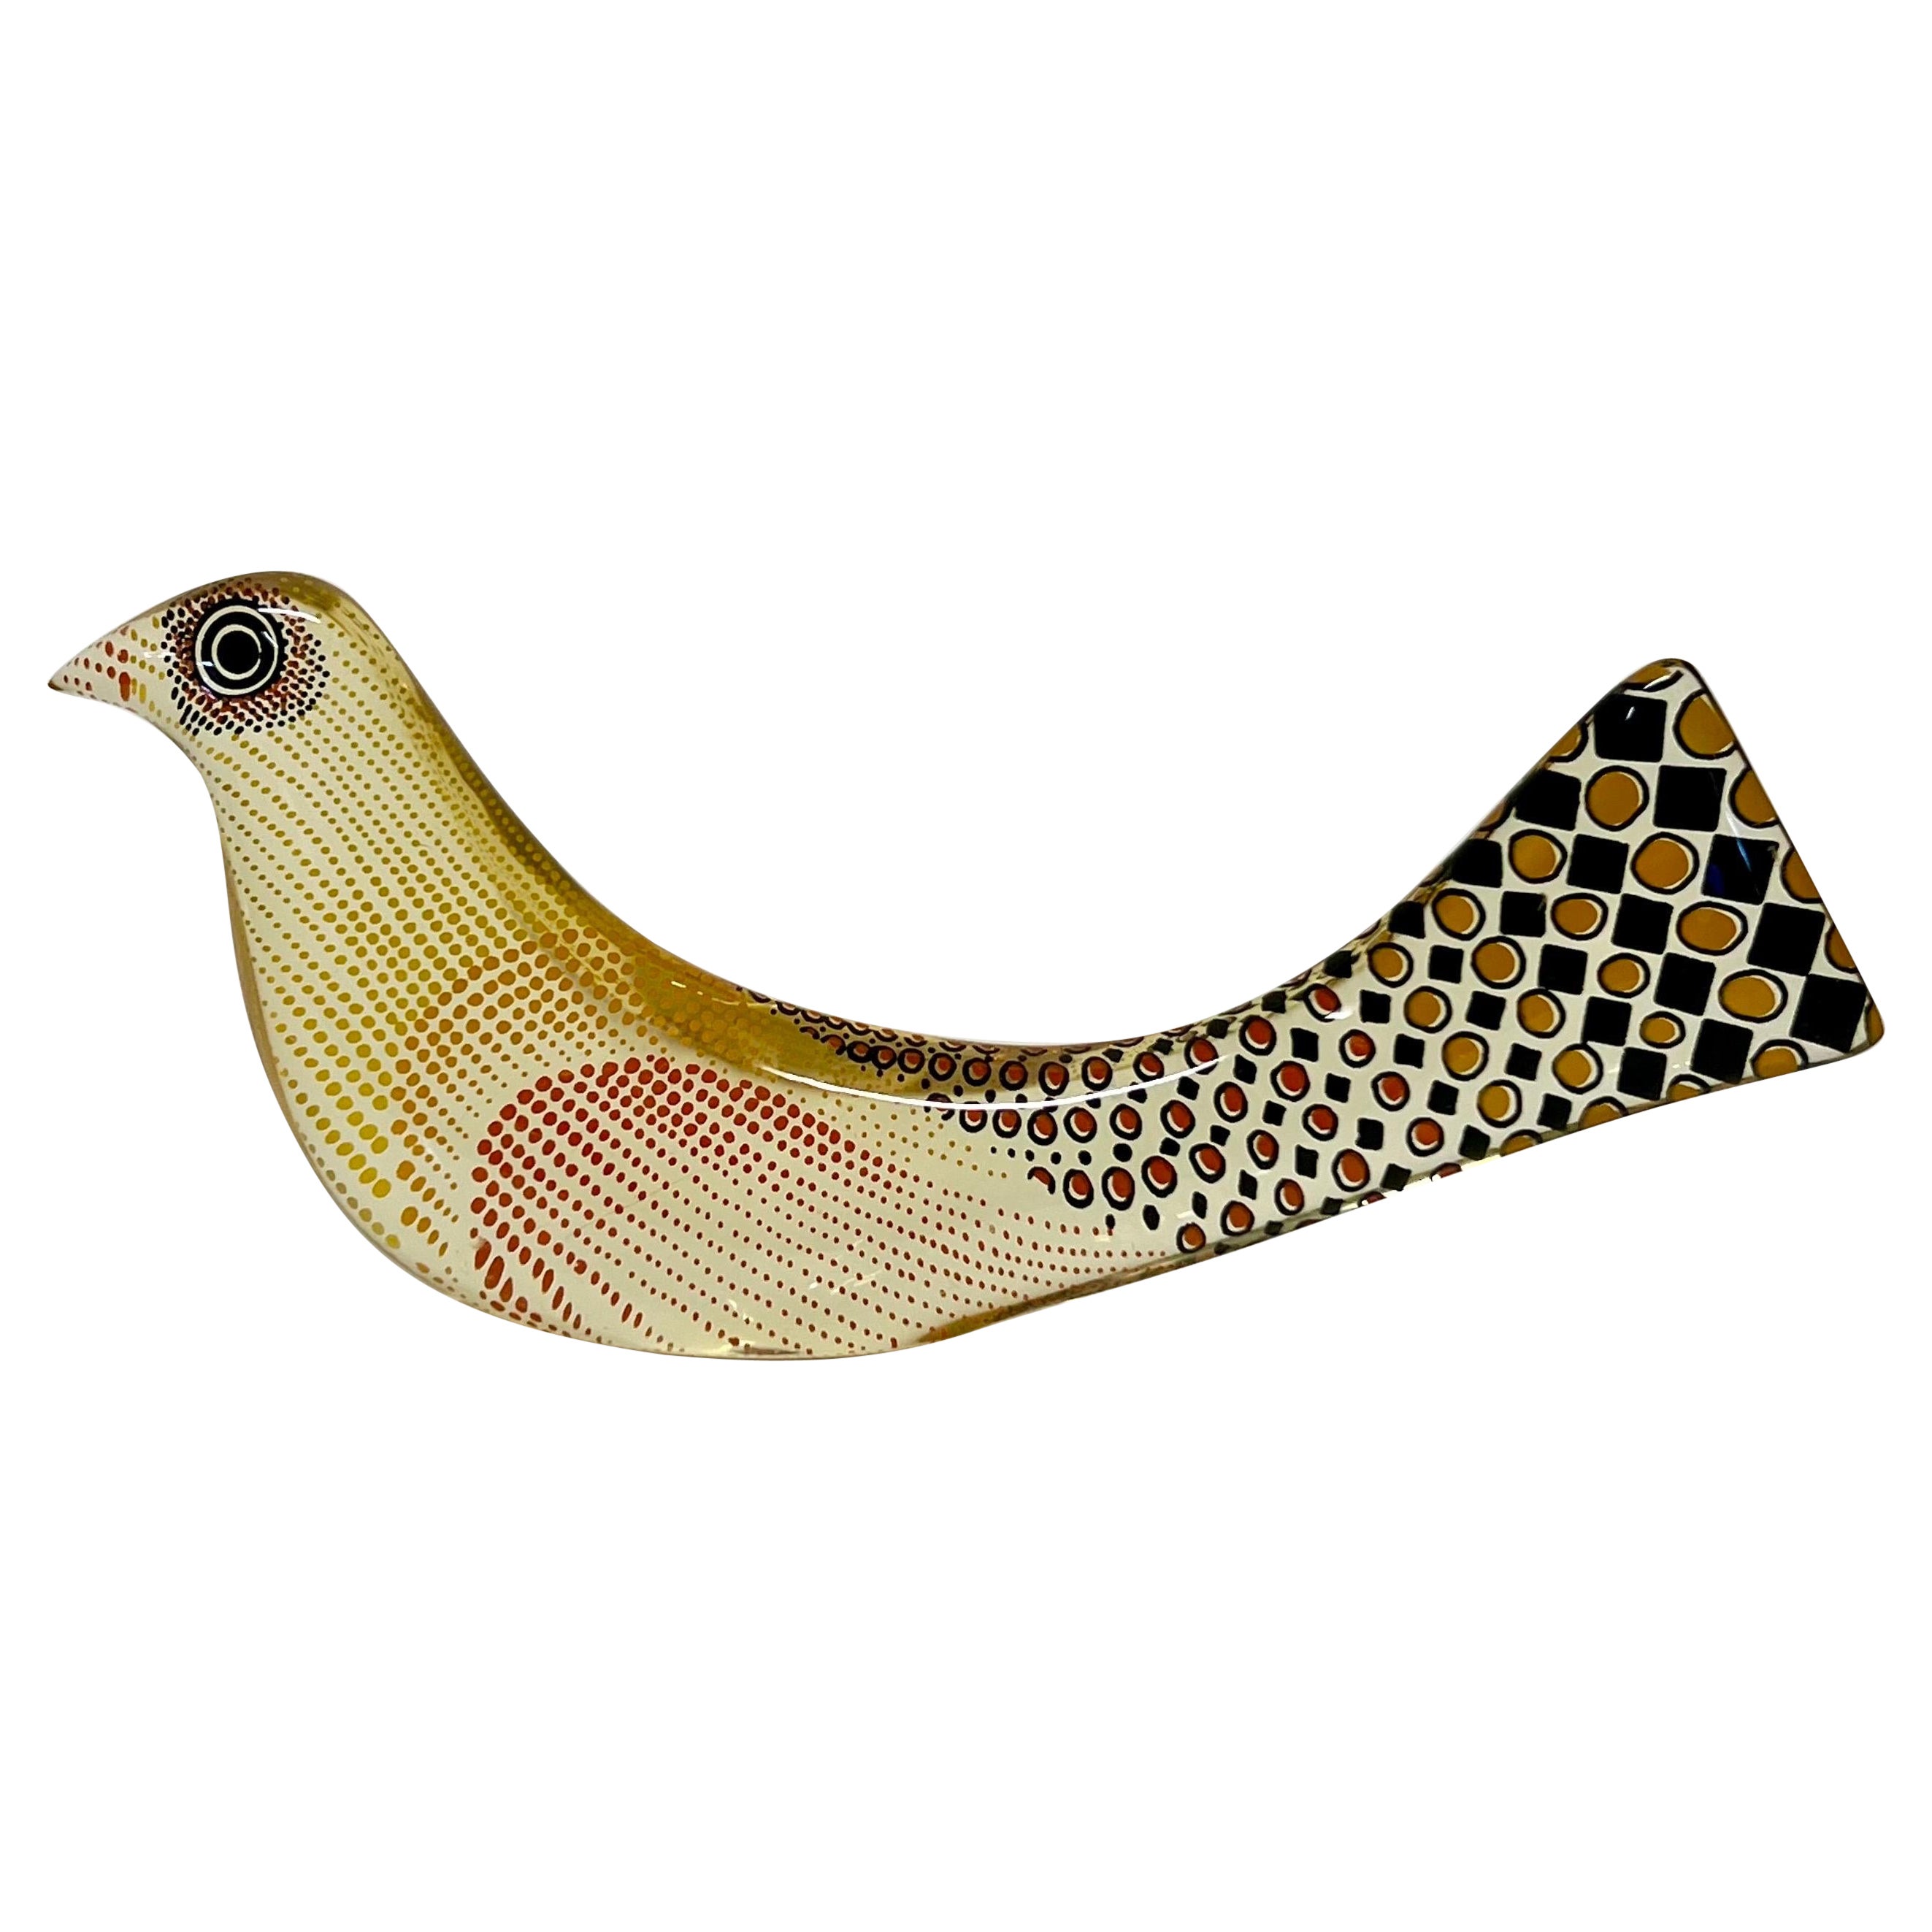 Vintage Abraham Palatnik Lucite Bird Sculpture Brazil c1960s